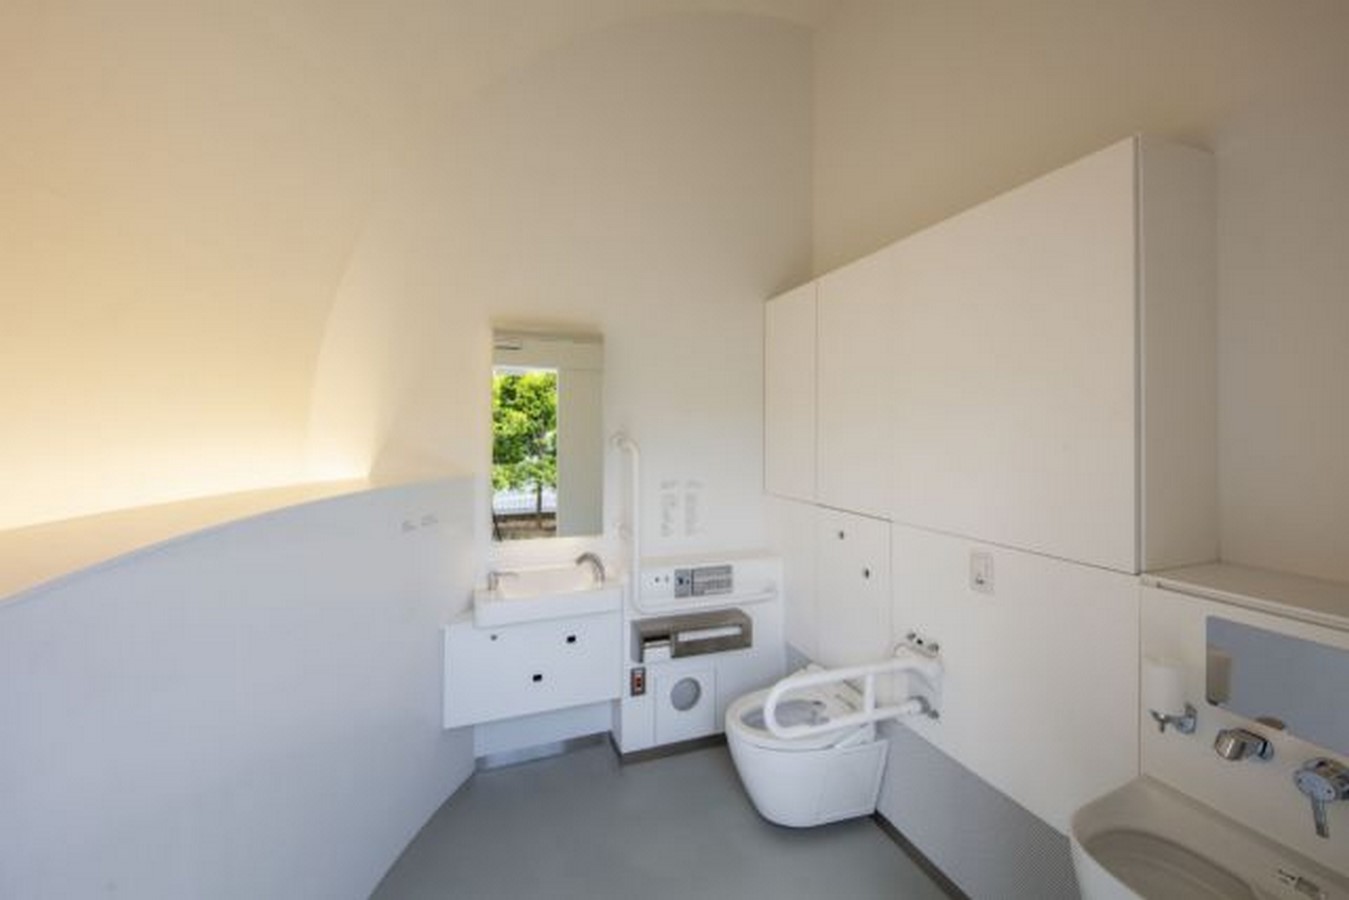 Hemispherical public toilet for Tokyo by Kazoo Sato: A New Take on Hygiene - Sheet4